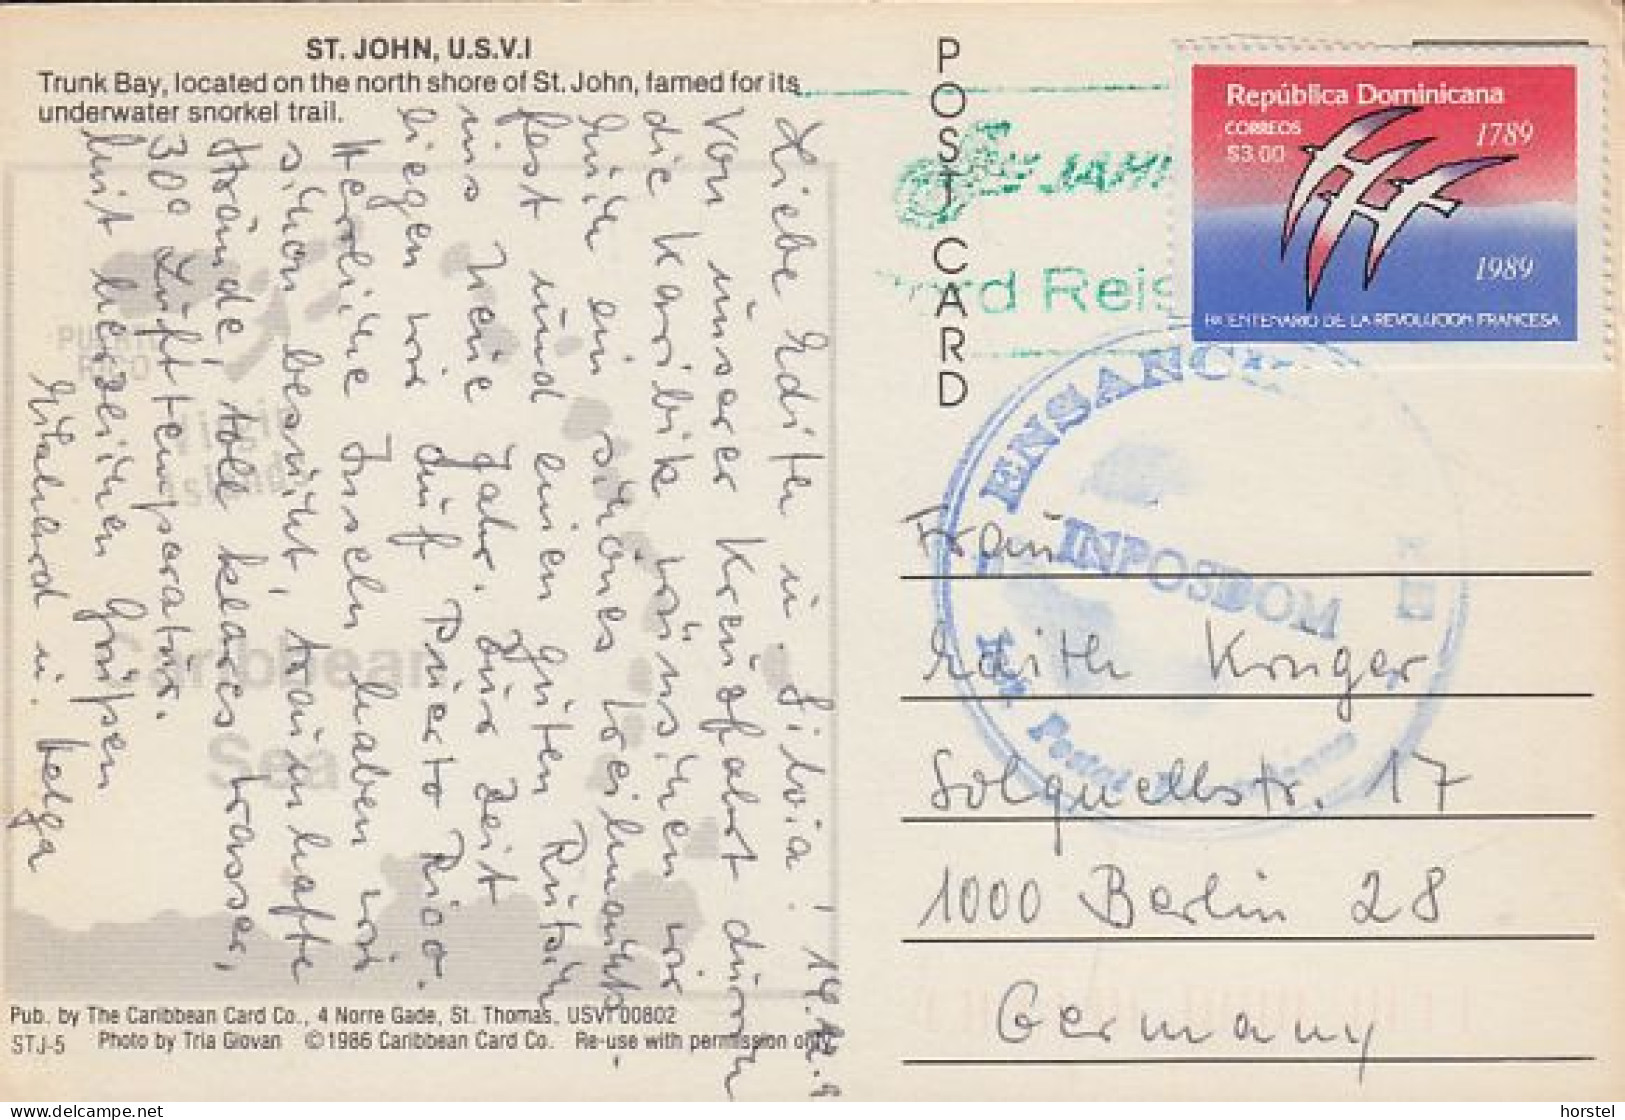 Jungferninseln - ST. John U.S.V.I - Trunk Bay - Nice Stamp "Rep.Dominicana" - Jungferninseln, Amerik.